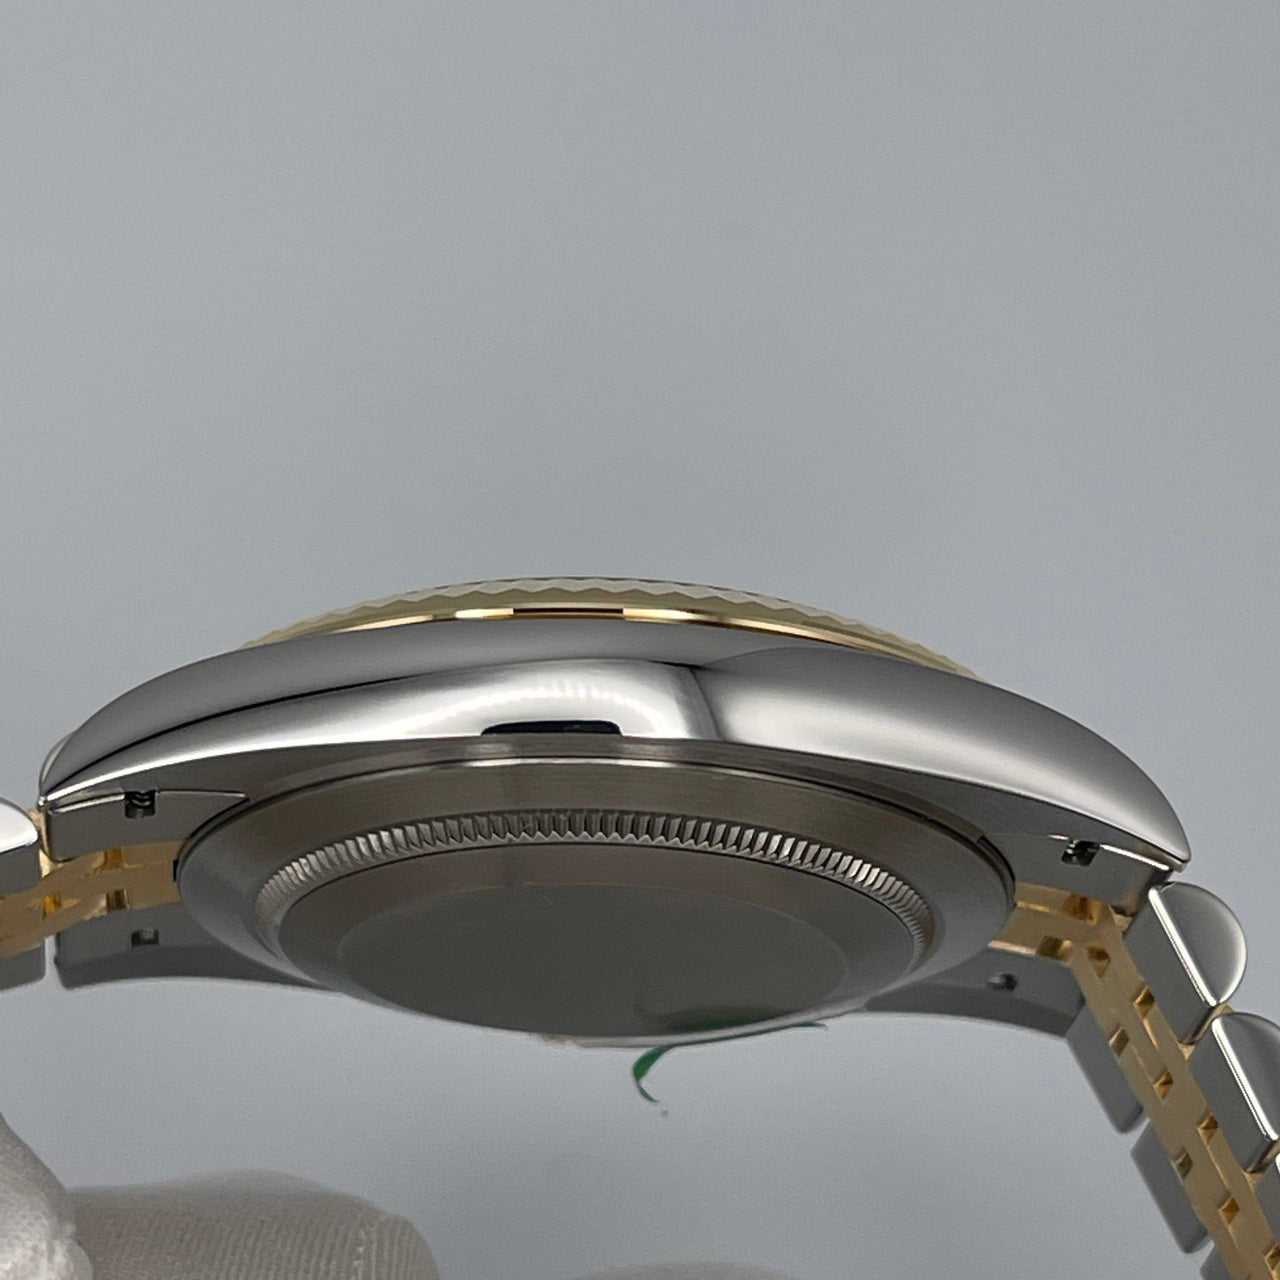 Luxury Watch Rolex Datejust 41 Yellow Gold & Stainless Steel Slate 'Wimledon' Dial Jubilee 126333 Wrist Aficionado